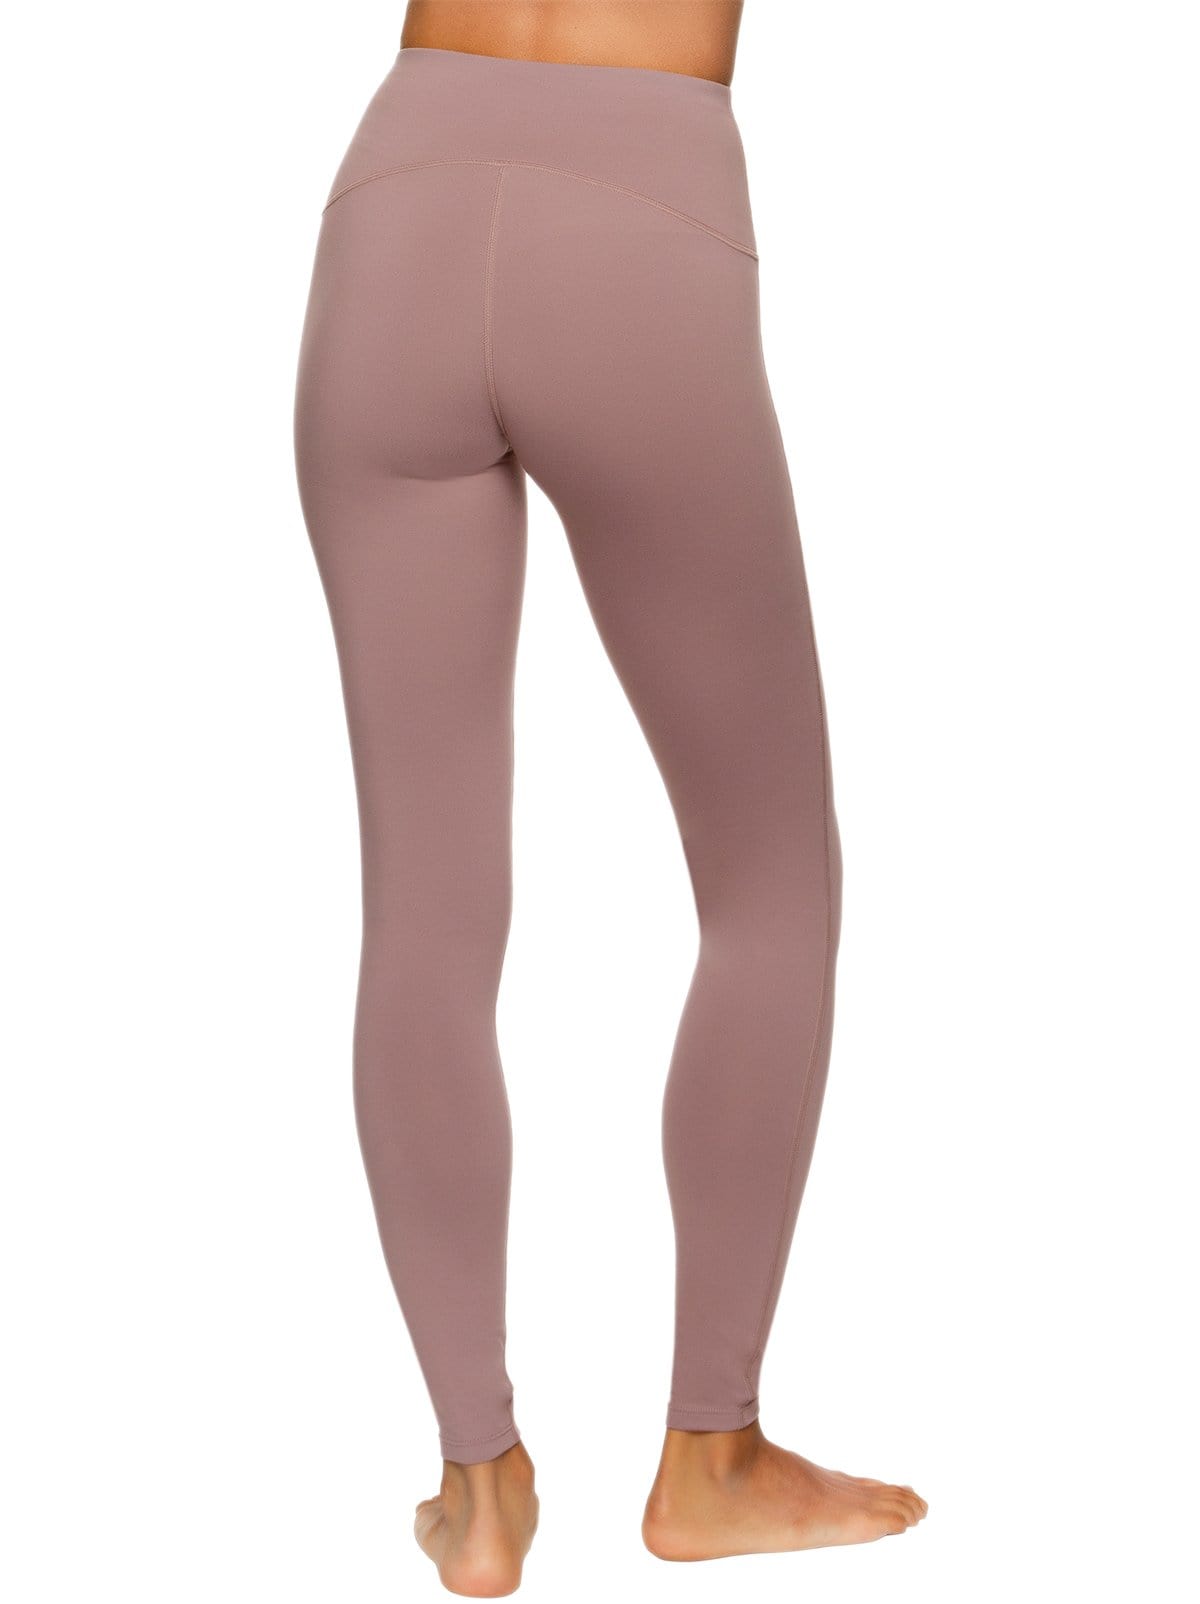 Felina Velvety Super Soft Lightweight Leggings 2-Pack - For Women - Yoga  Pants, Workout Clothes (Warm Desert, Large) 